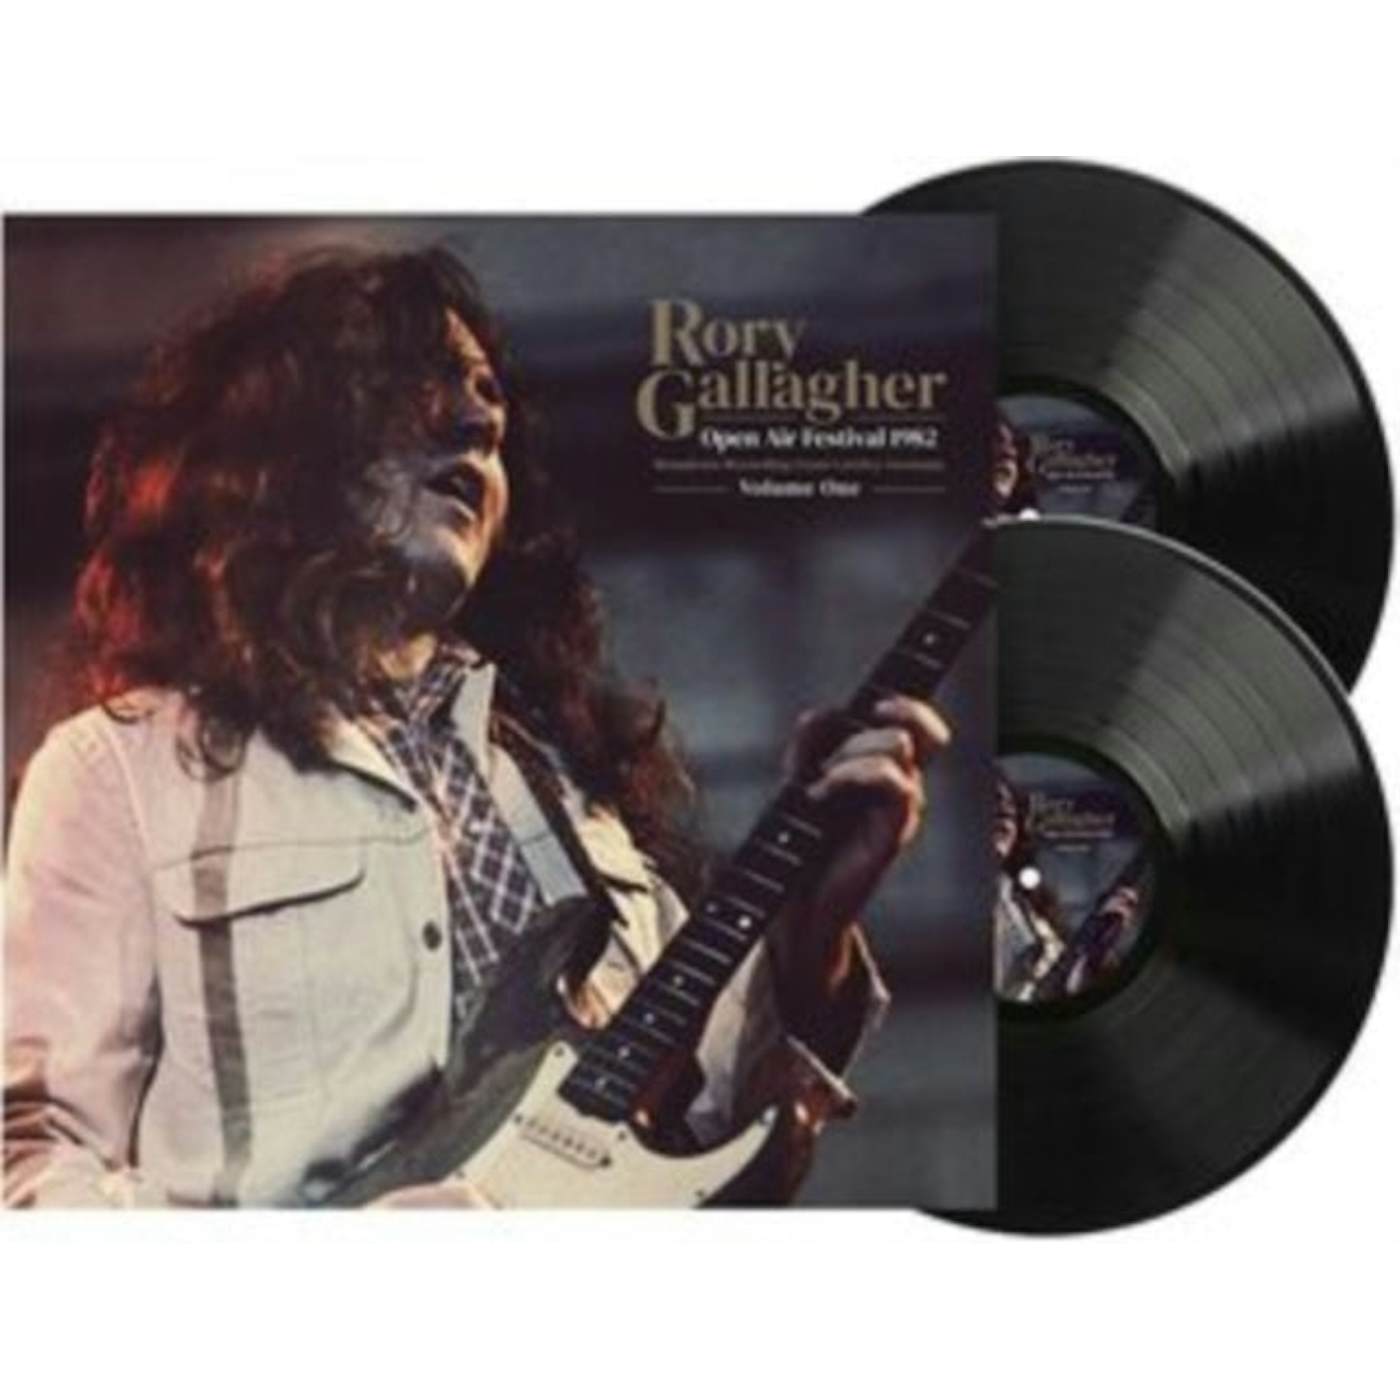 Rory Gallagher LP - Open Air Festival 1982 Vol.1 (Vinyl)